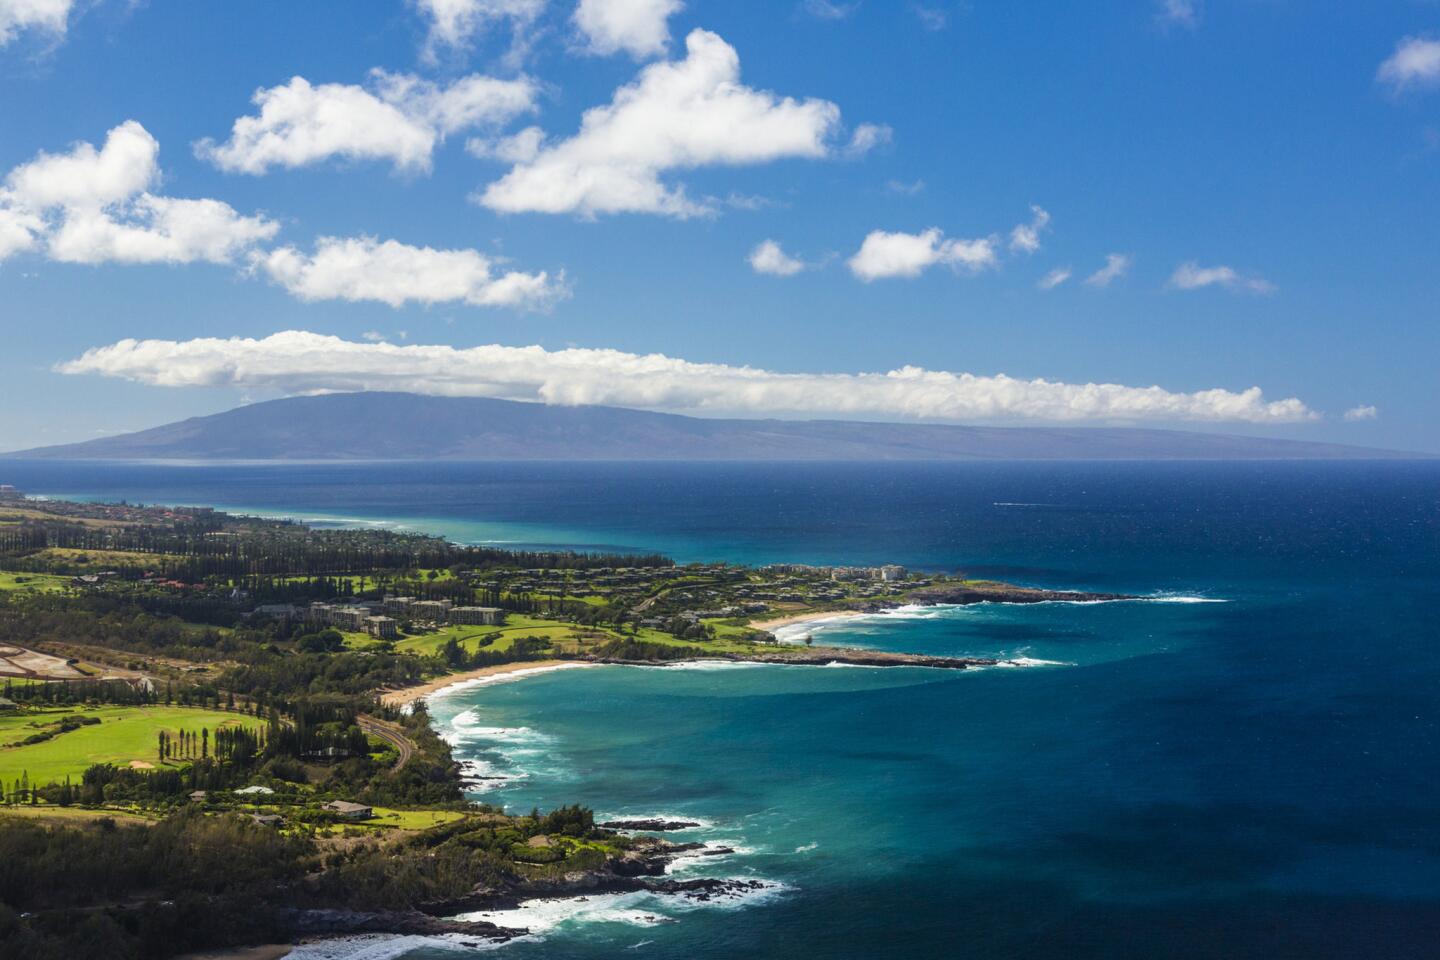 2016 No. 3: Kapalua Bay Beach in Maui, Hawaii